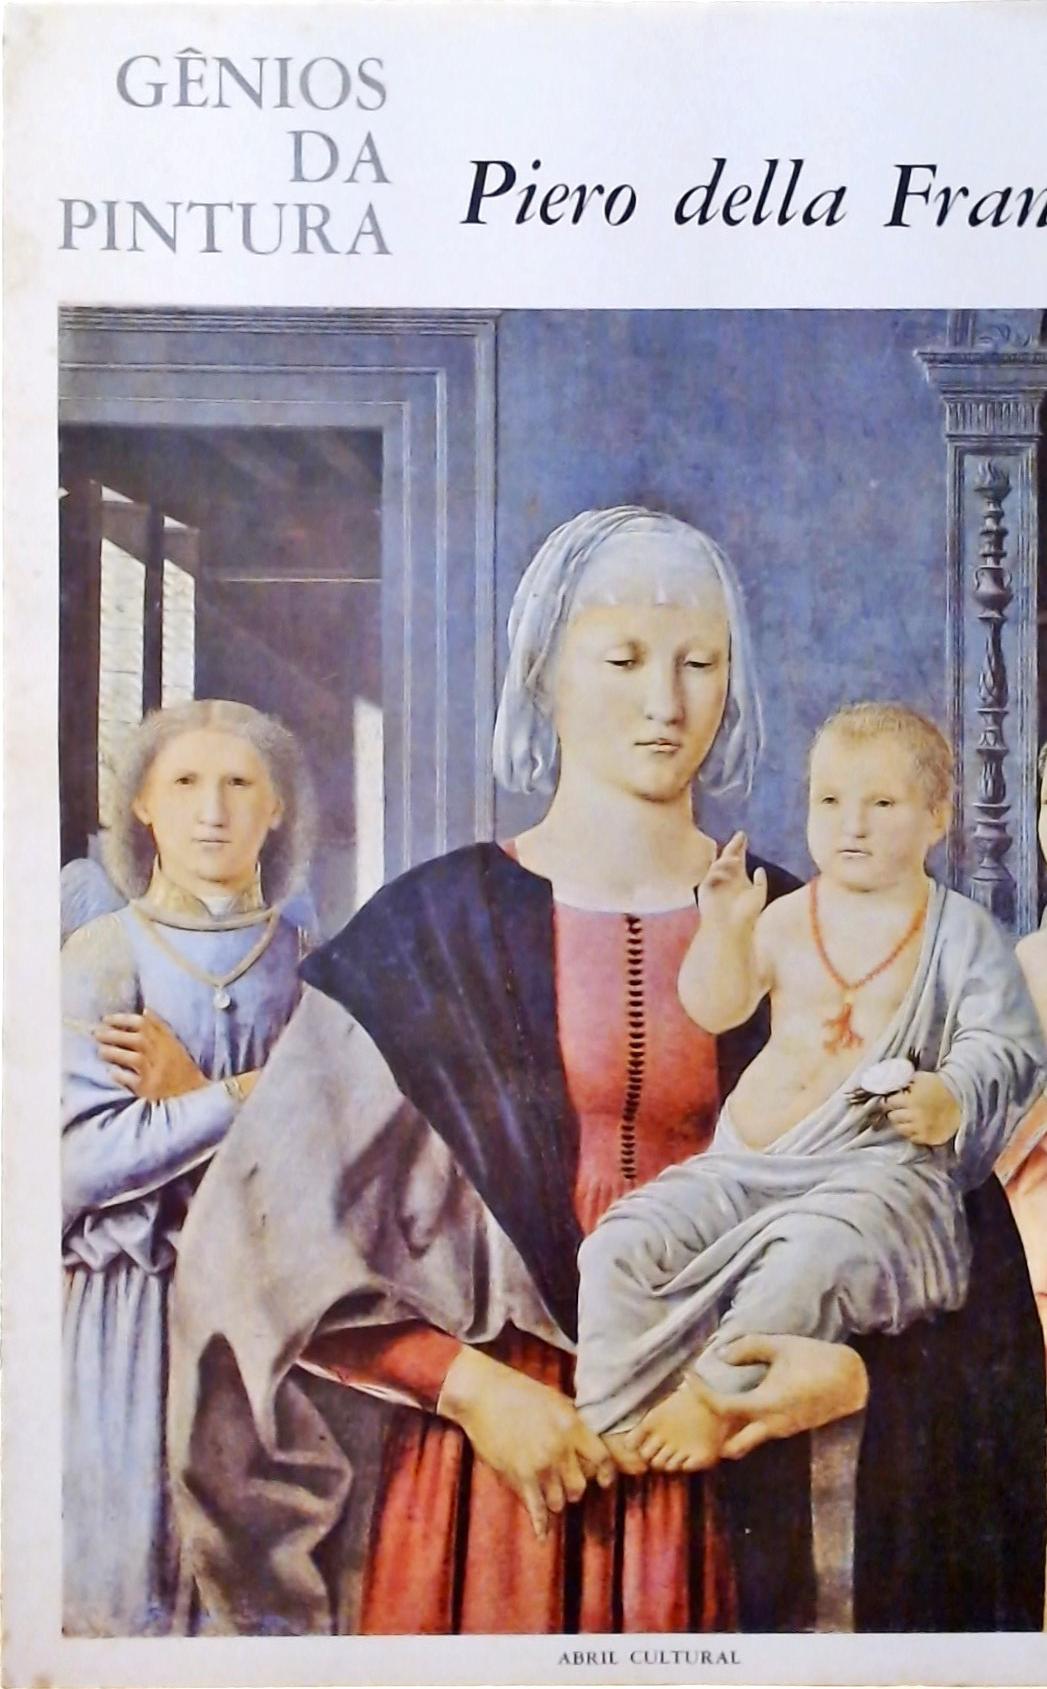 Gênios da Pintura - Piero della Francesca